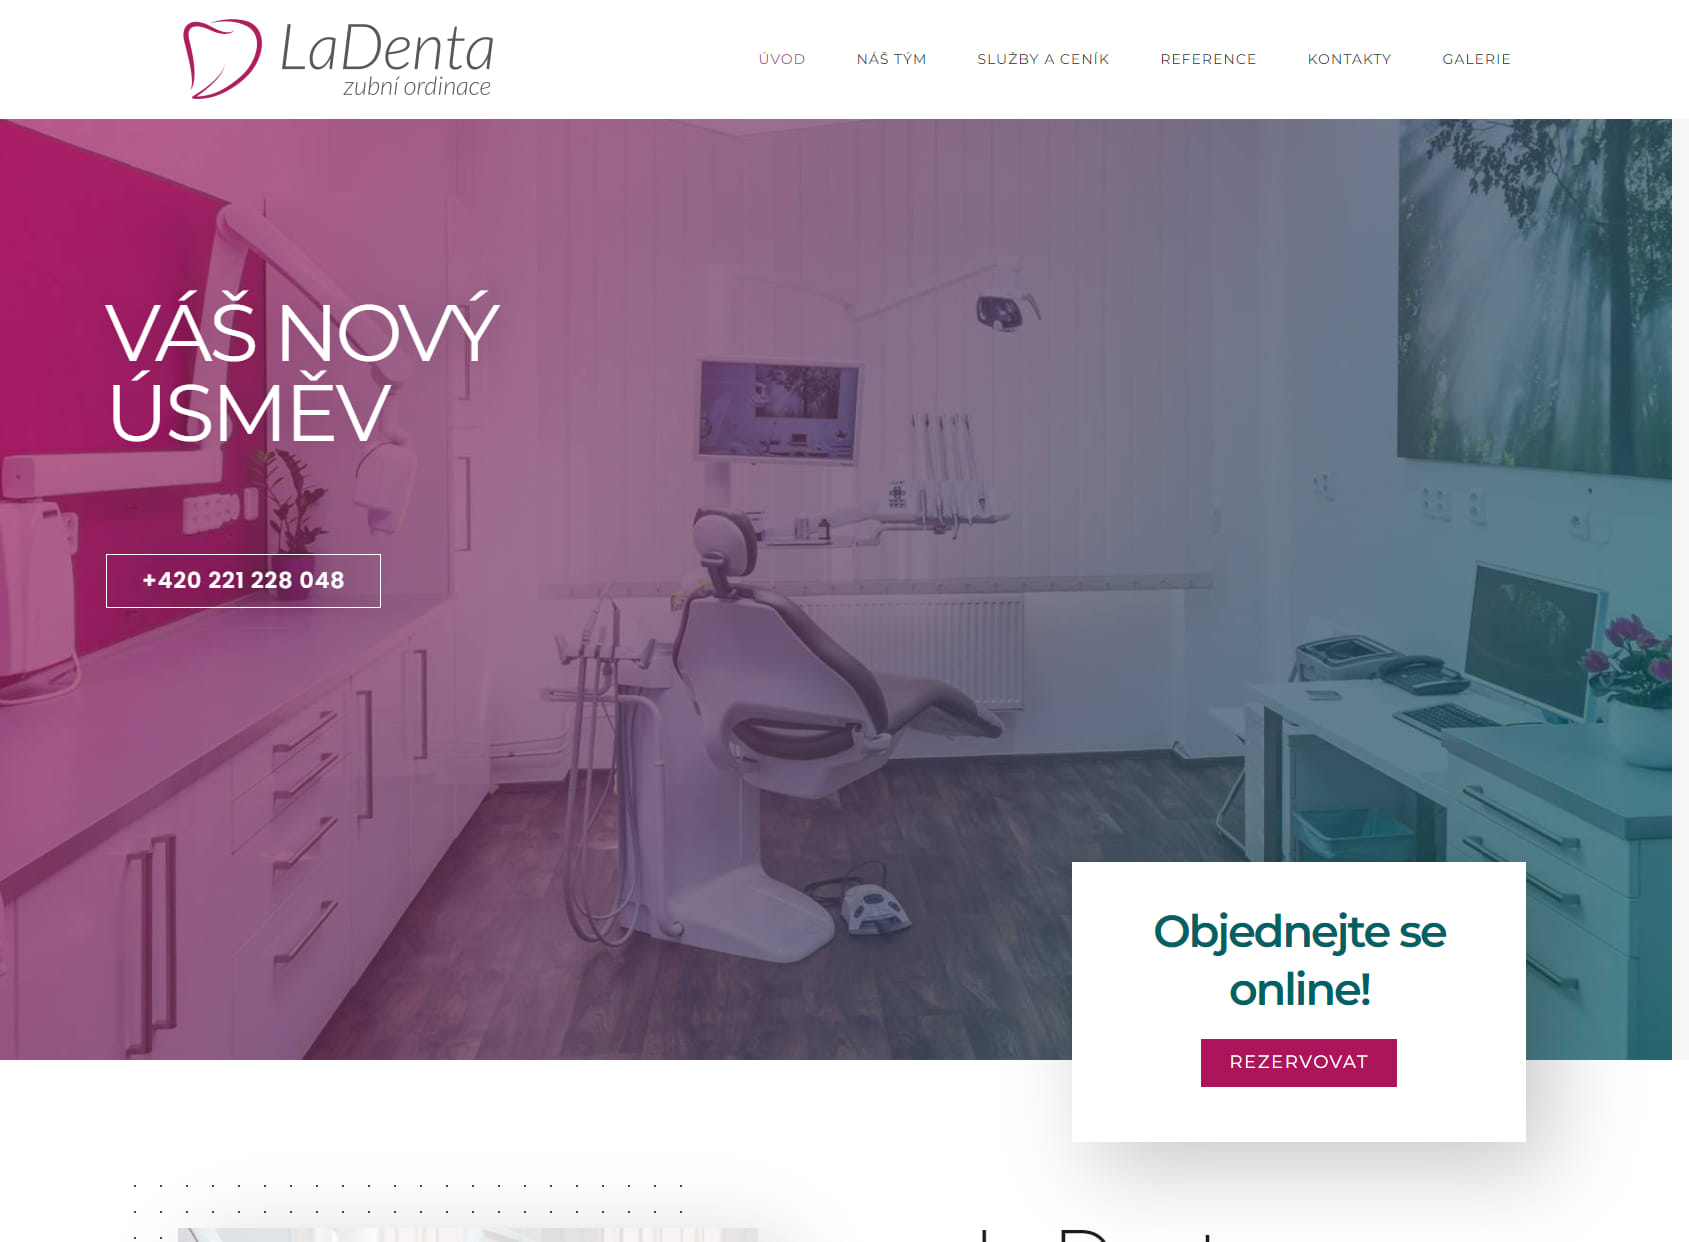 Dental Surgery LaDenta